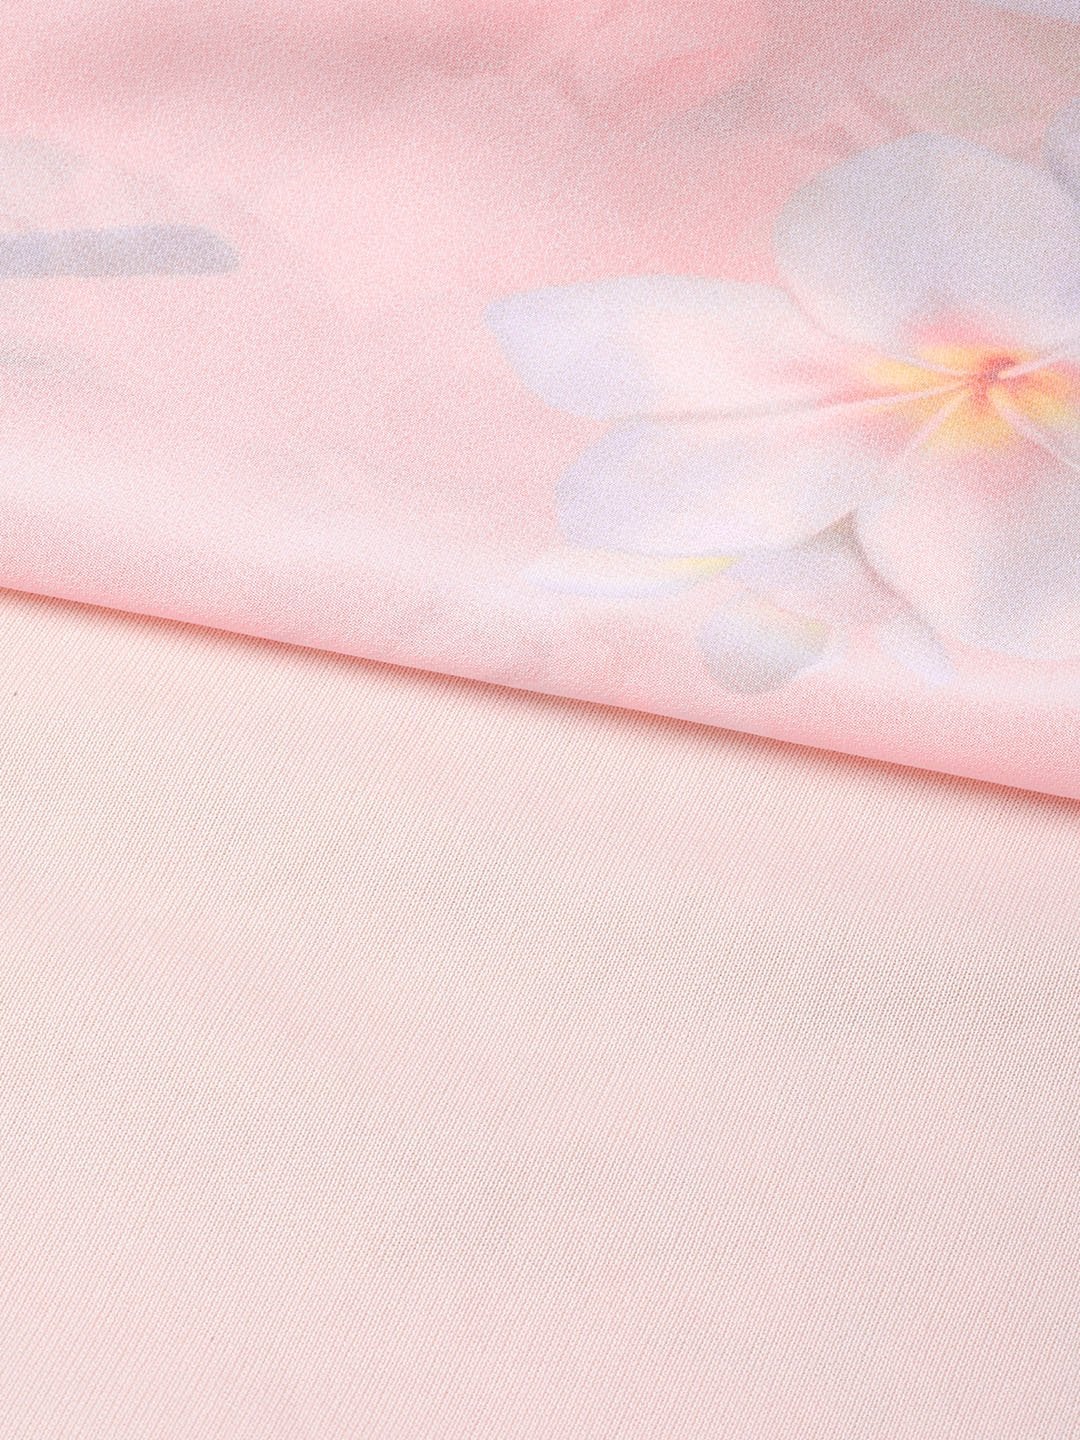 Women's Peach Floral Off Shoulder Midi Dress - SASSAFRAS